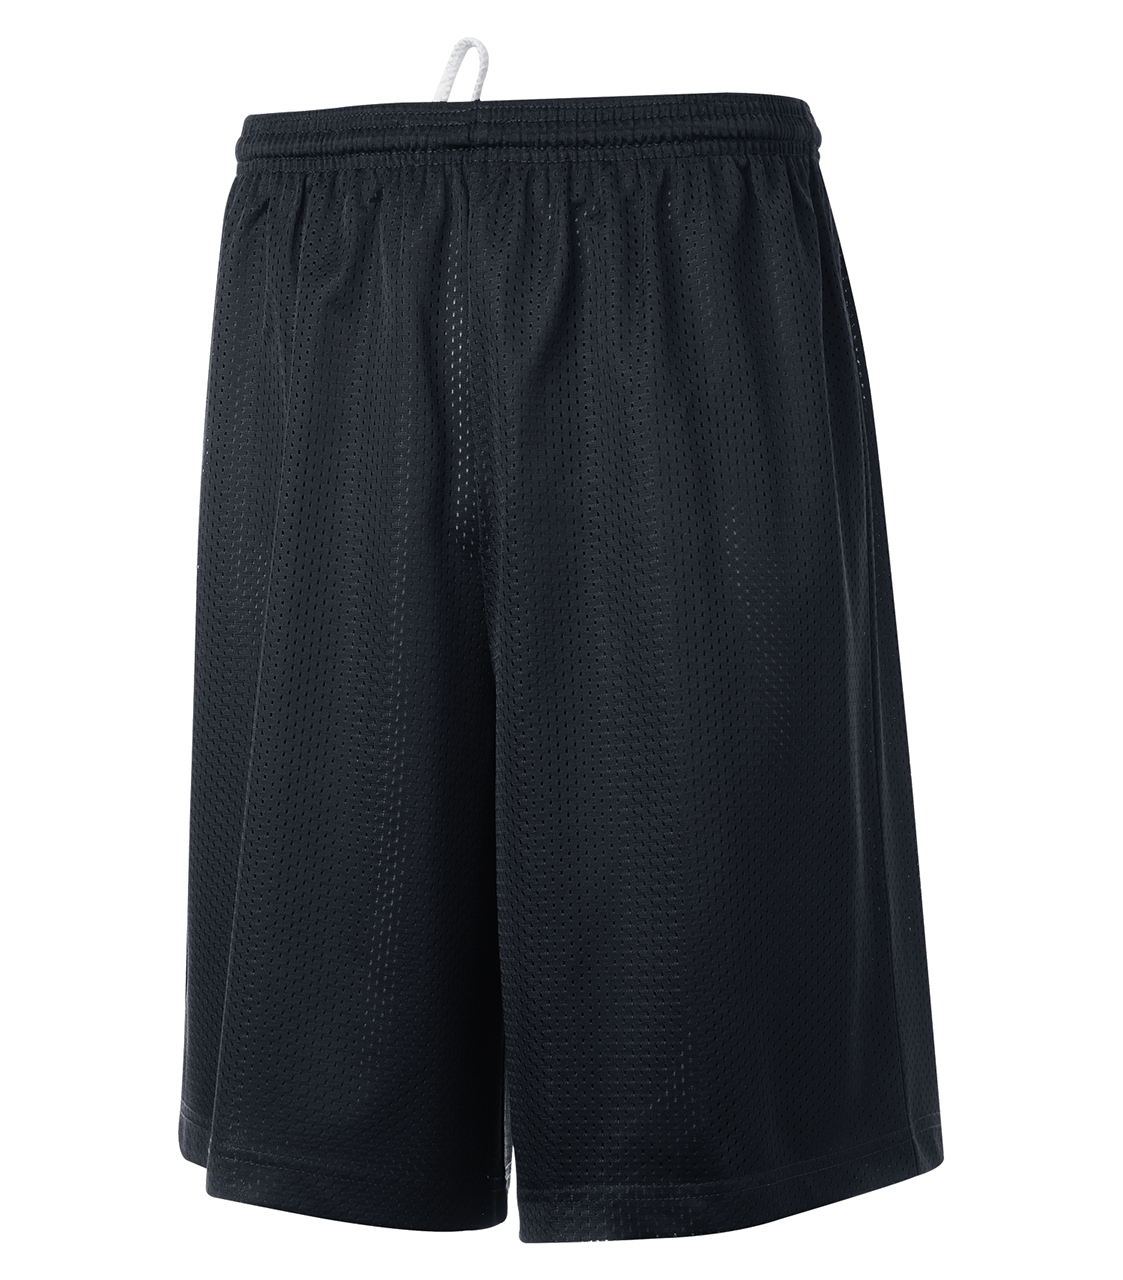 House League Jersey Shorts - Northern Trailblazers Basketball